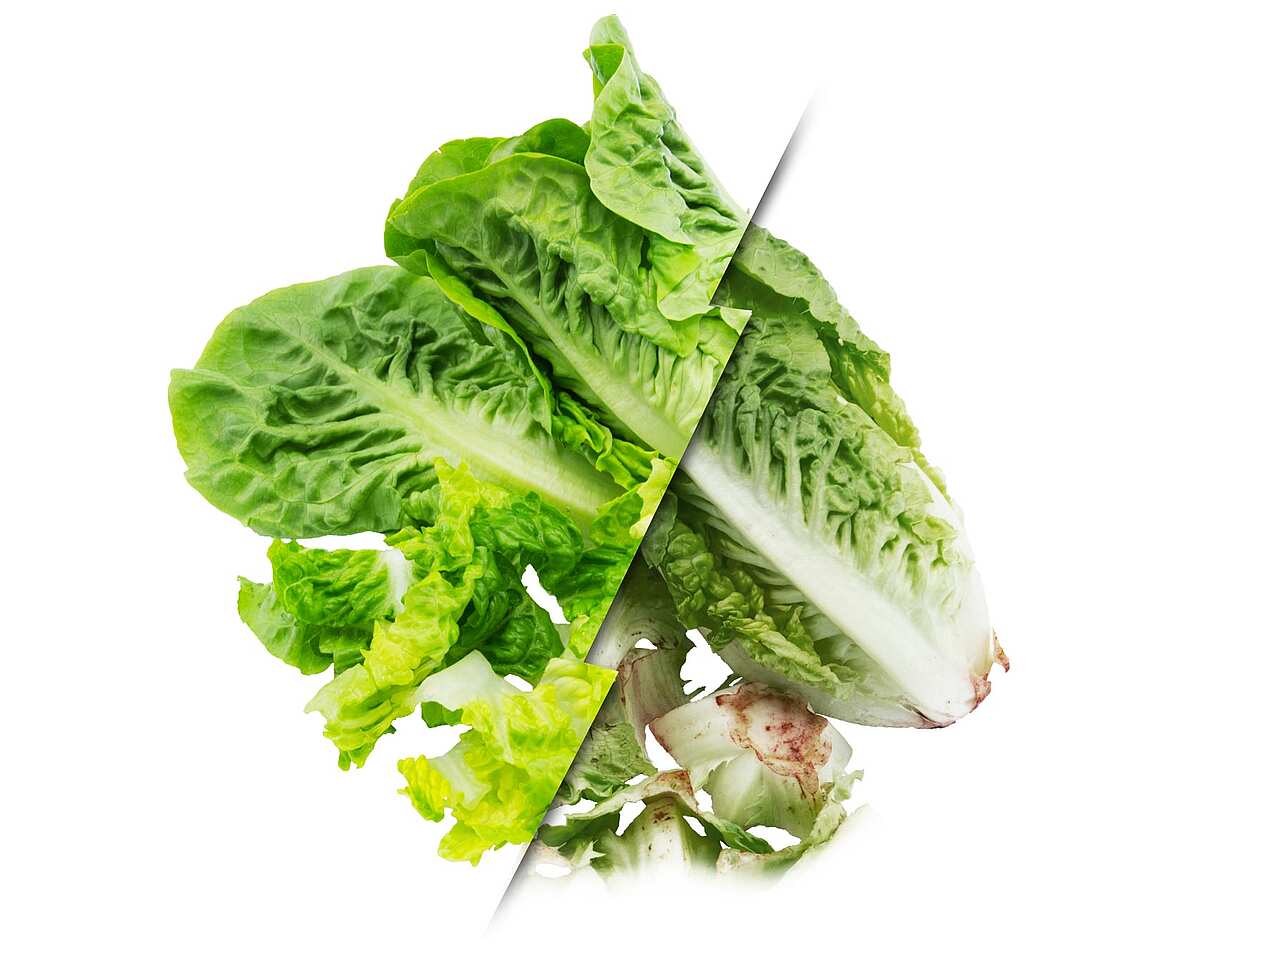 Fresh-Cut Lettuce treated with Food freshly vs. untreated